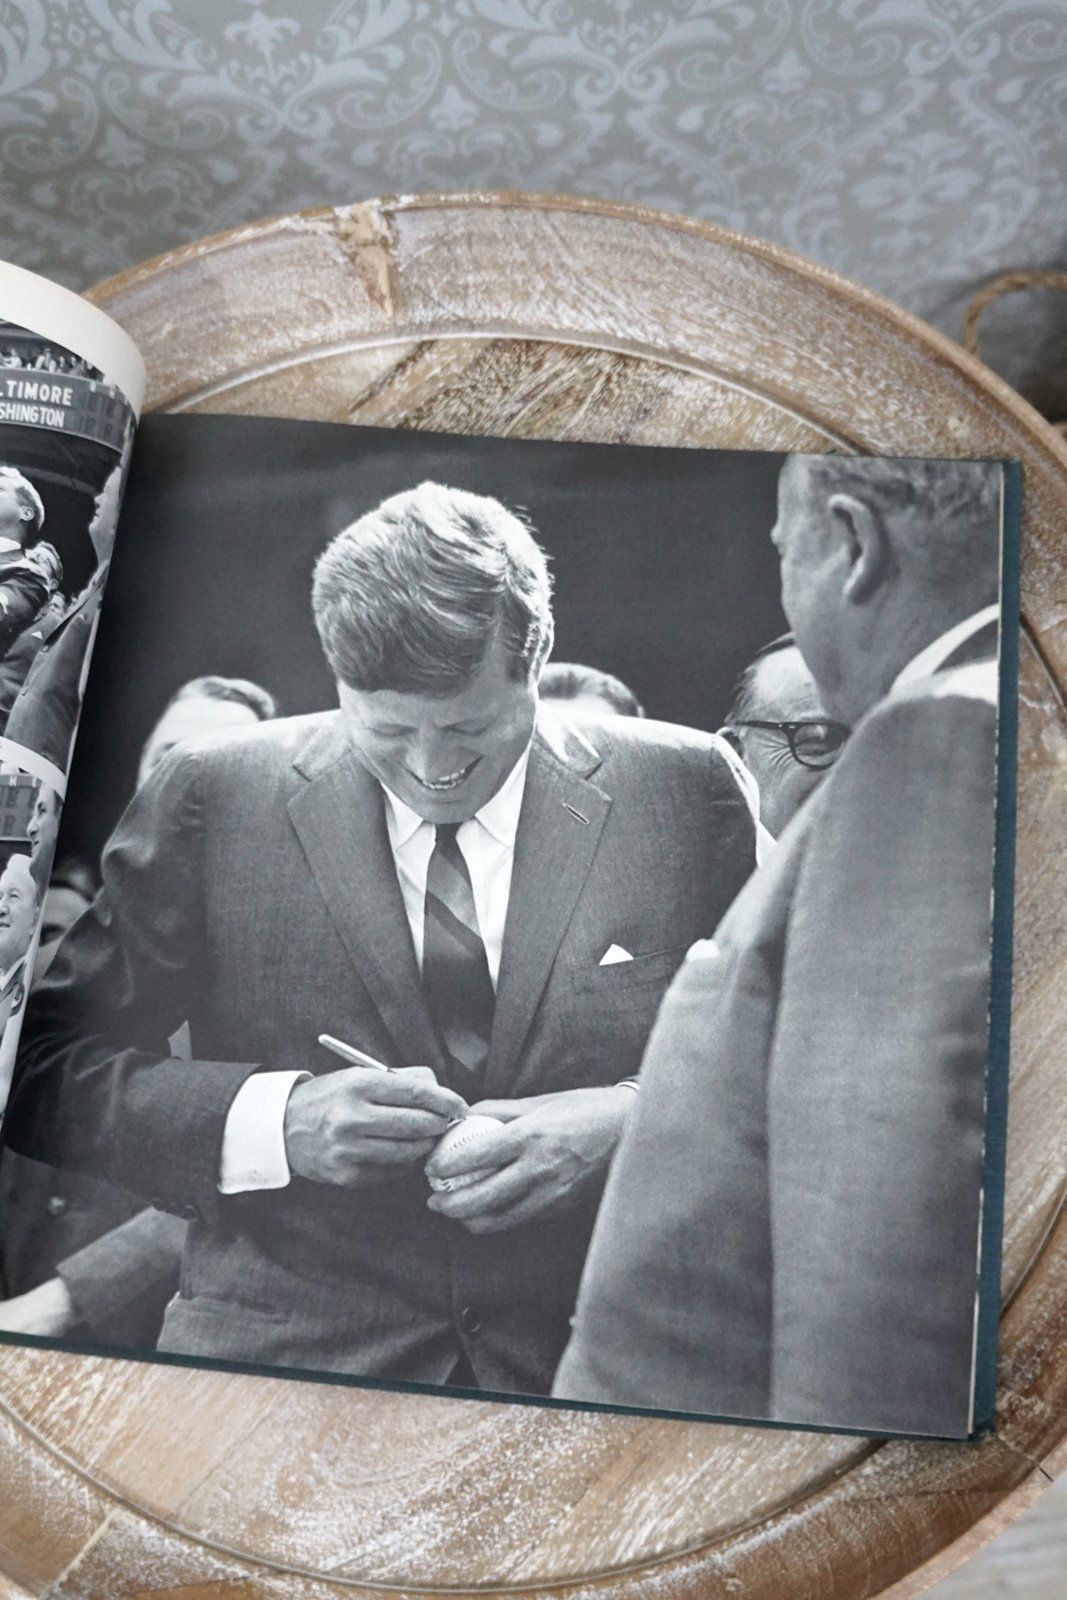 Vintage John Fitzgerald Kennedy As We Remember Him Book-closiTherapi | vinTage